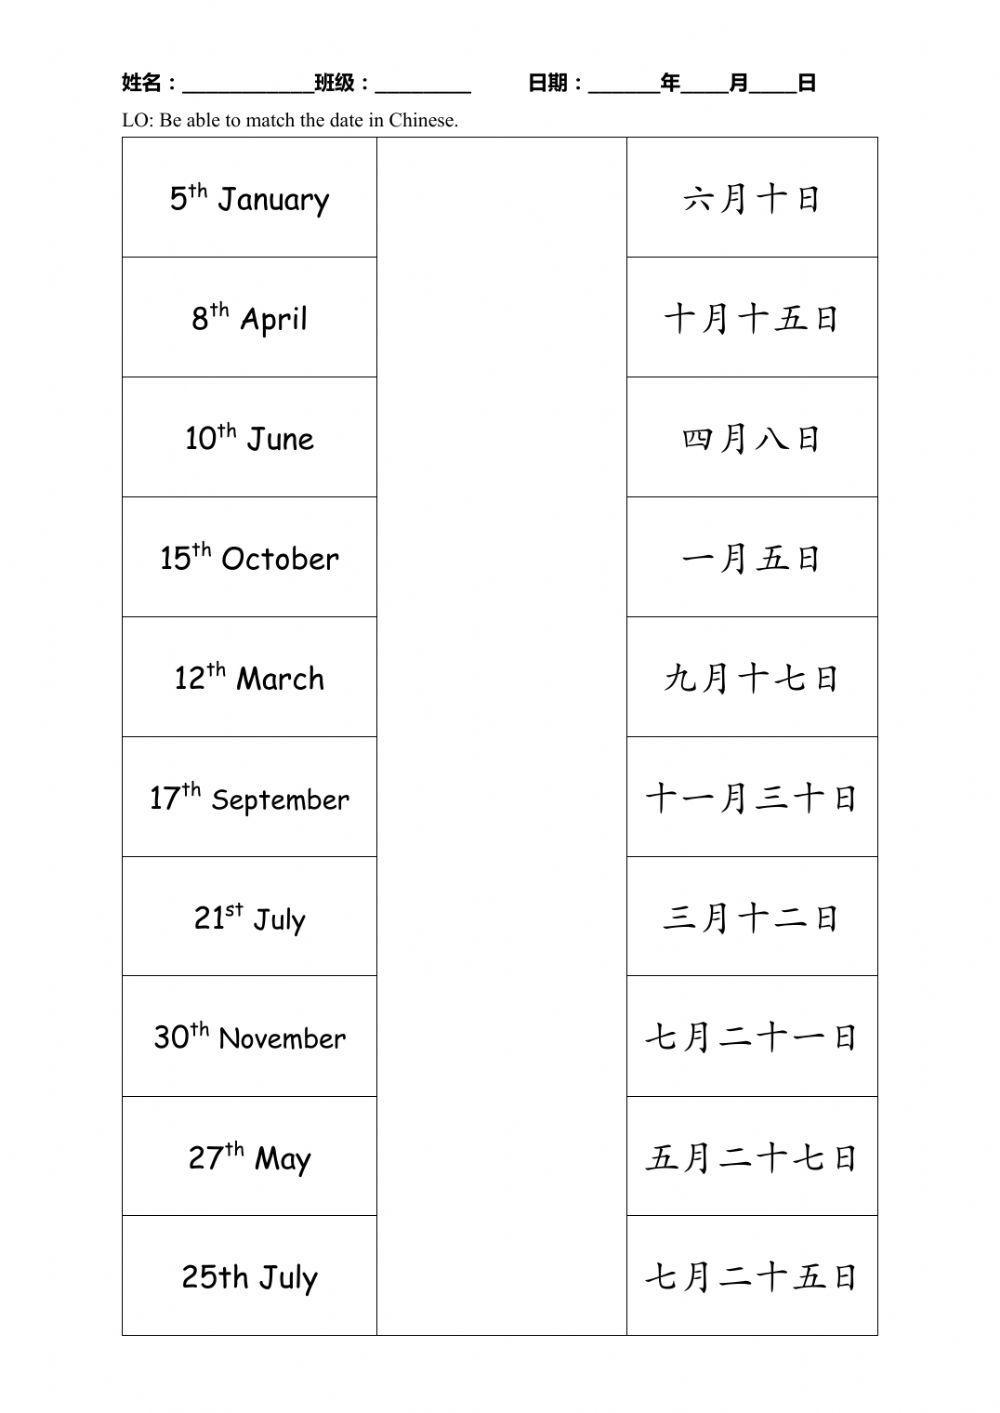 日期-match the date in Chinese